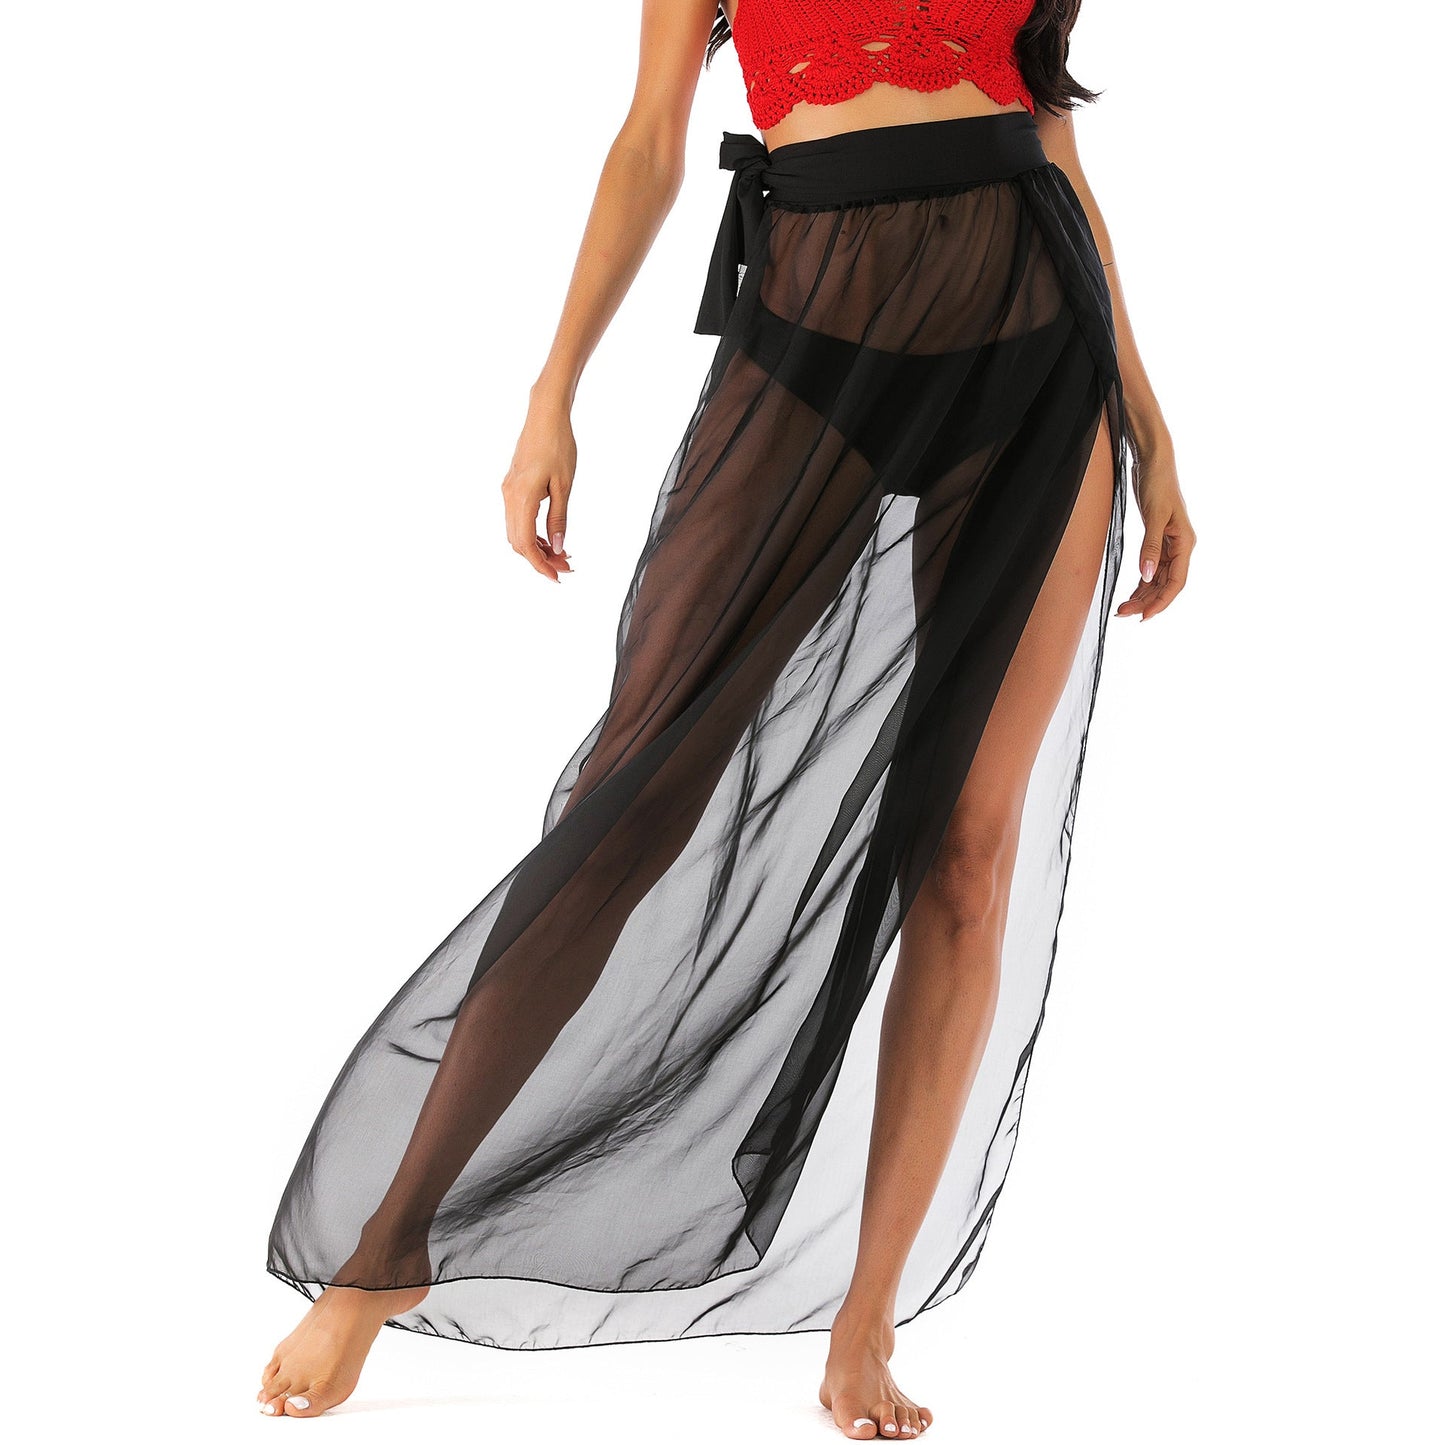 Black Irregular Chiffon See Throught Summer Beach Skirts-Swimwear-Free Shipping at meselling99